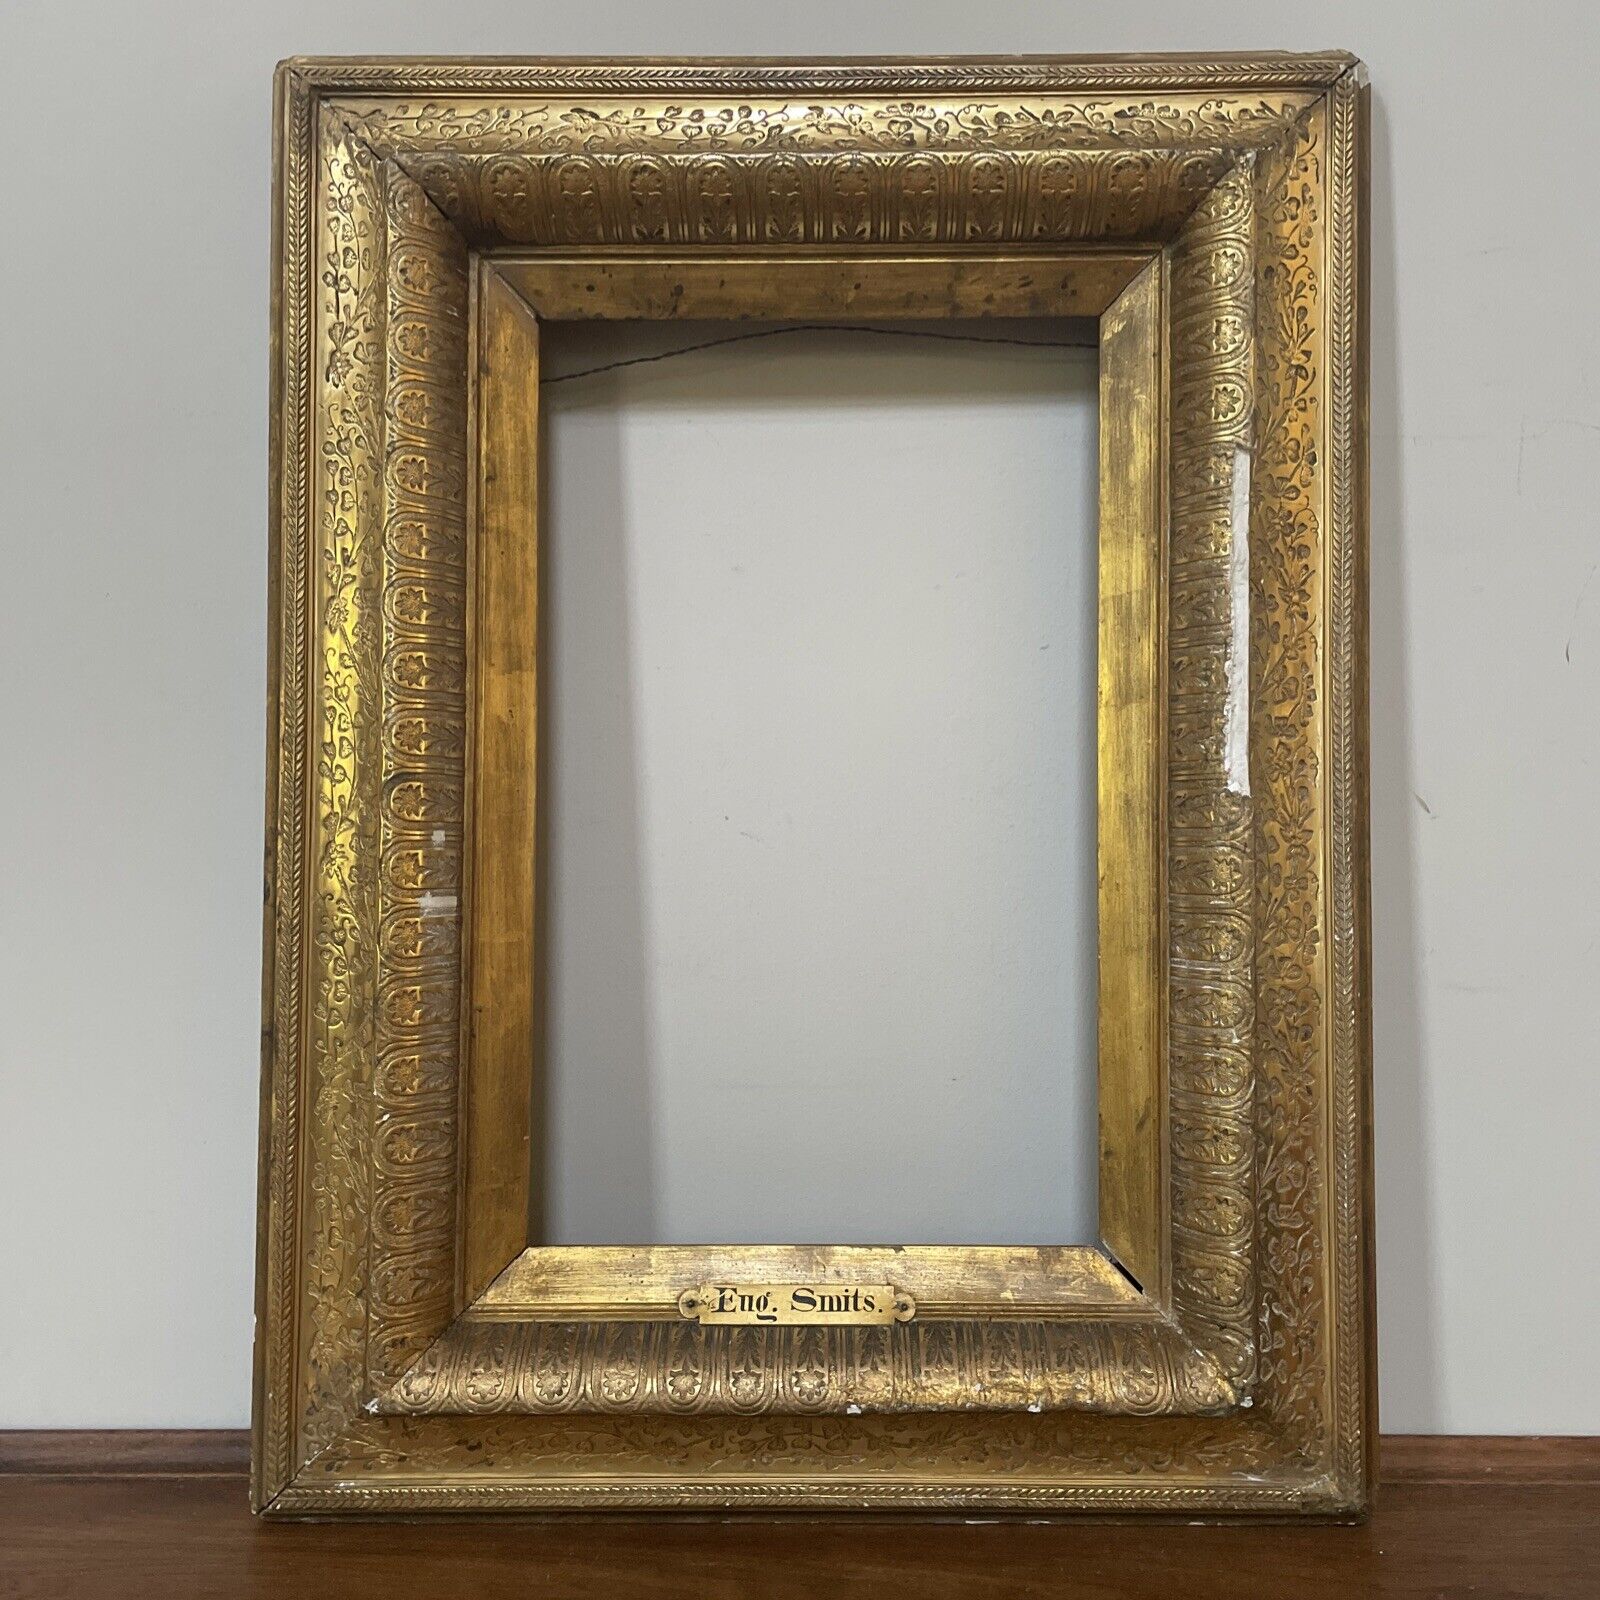 Rare EUG.SMITHS Victorian Large Gold Gilded Ornate Heavy Wooden Art Frame